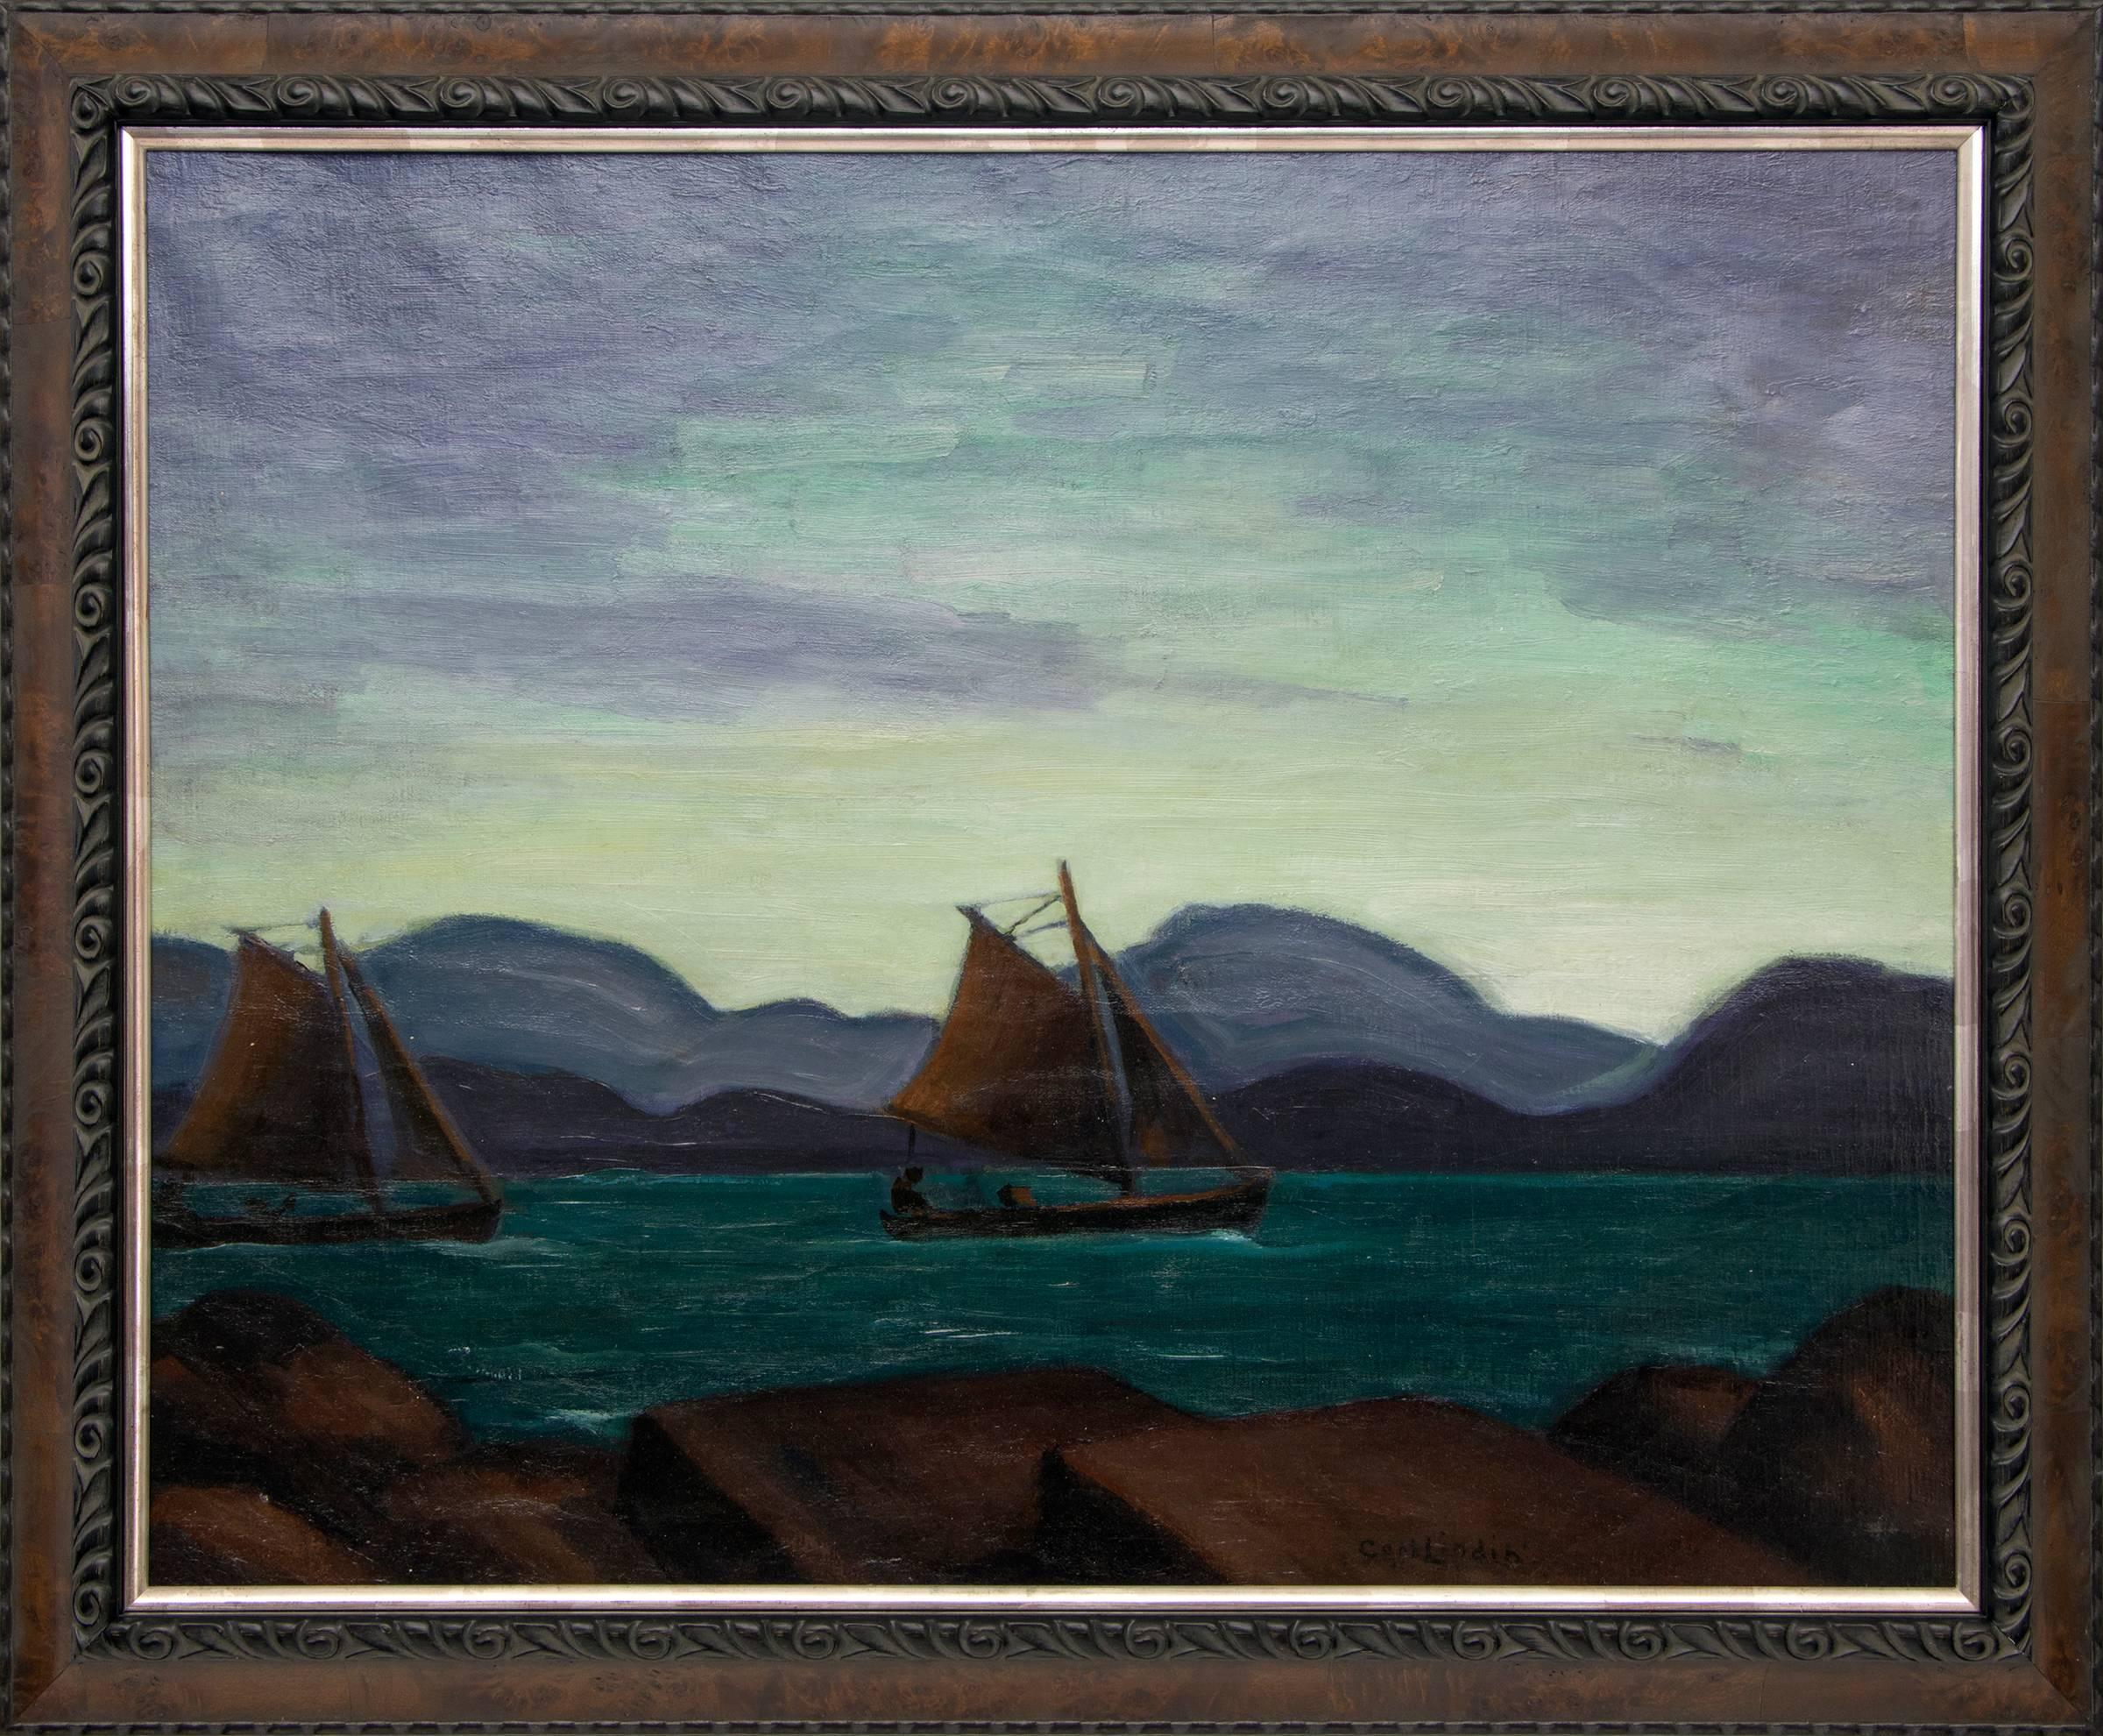 Waterways (Lysekil, Schweden), Großes gerahmtes Meereslandschaften-Ölgemälde, 1930er Jahre  – Painting von Carl Lindin